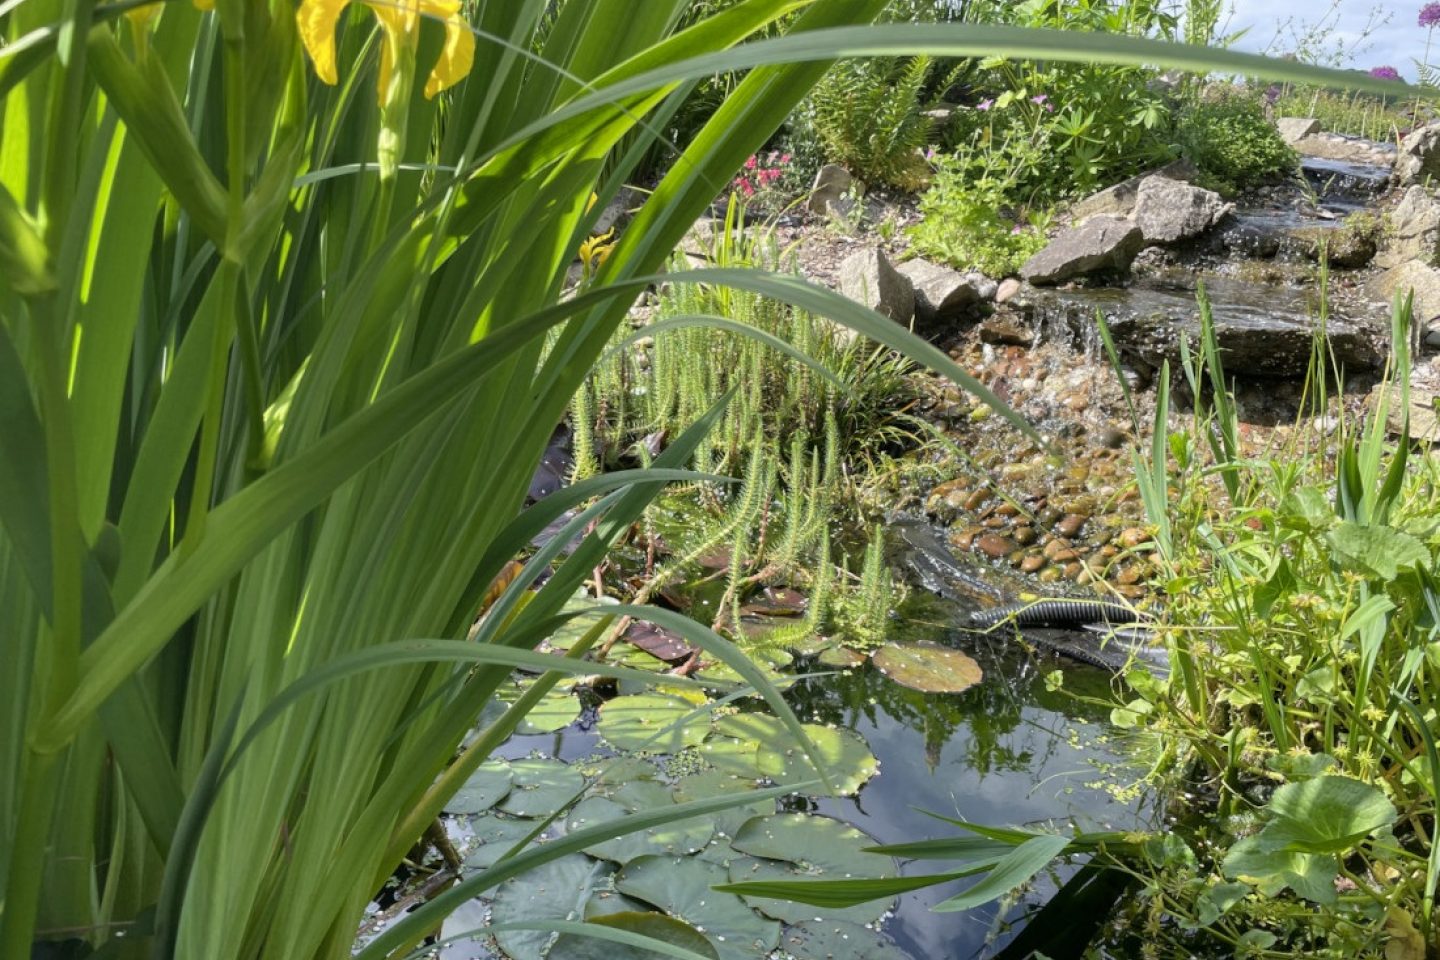 Lillies in sensory garden geoff stevens care farm